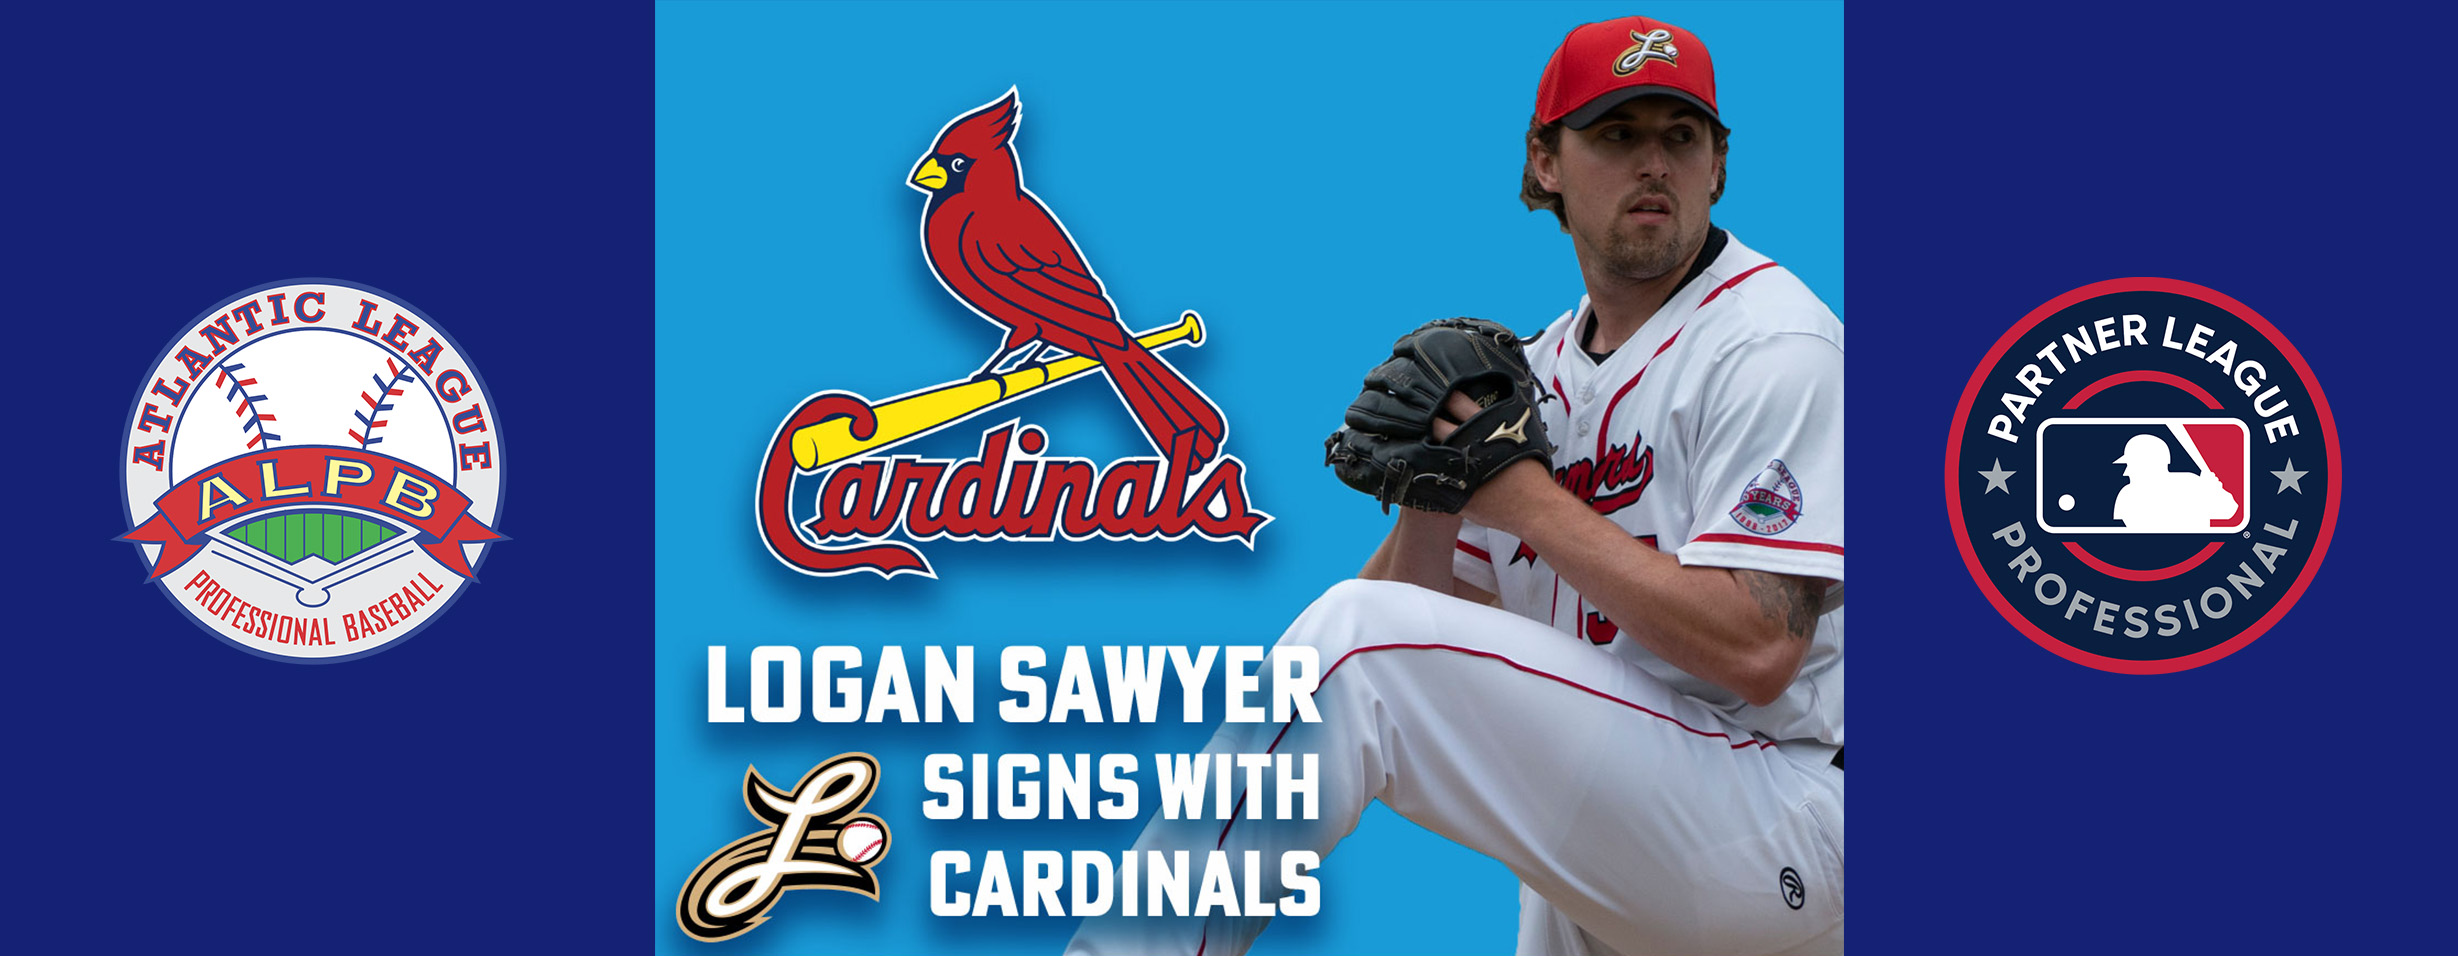 Former Barnstormer Sawyer signs with Cardinals